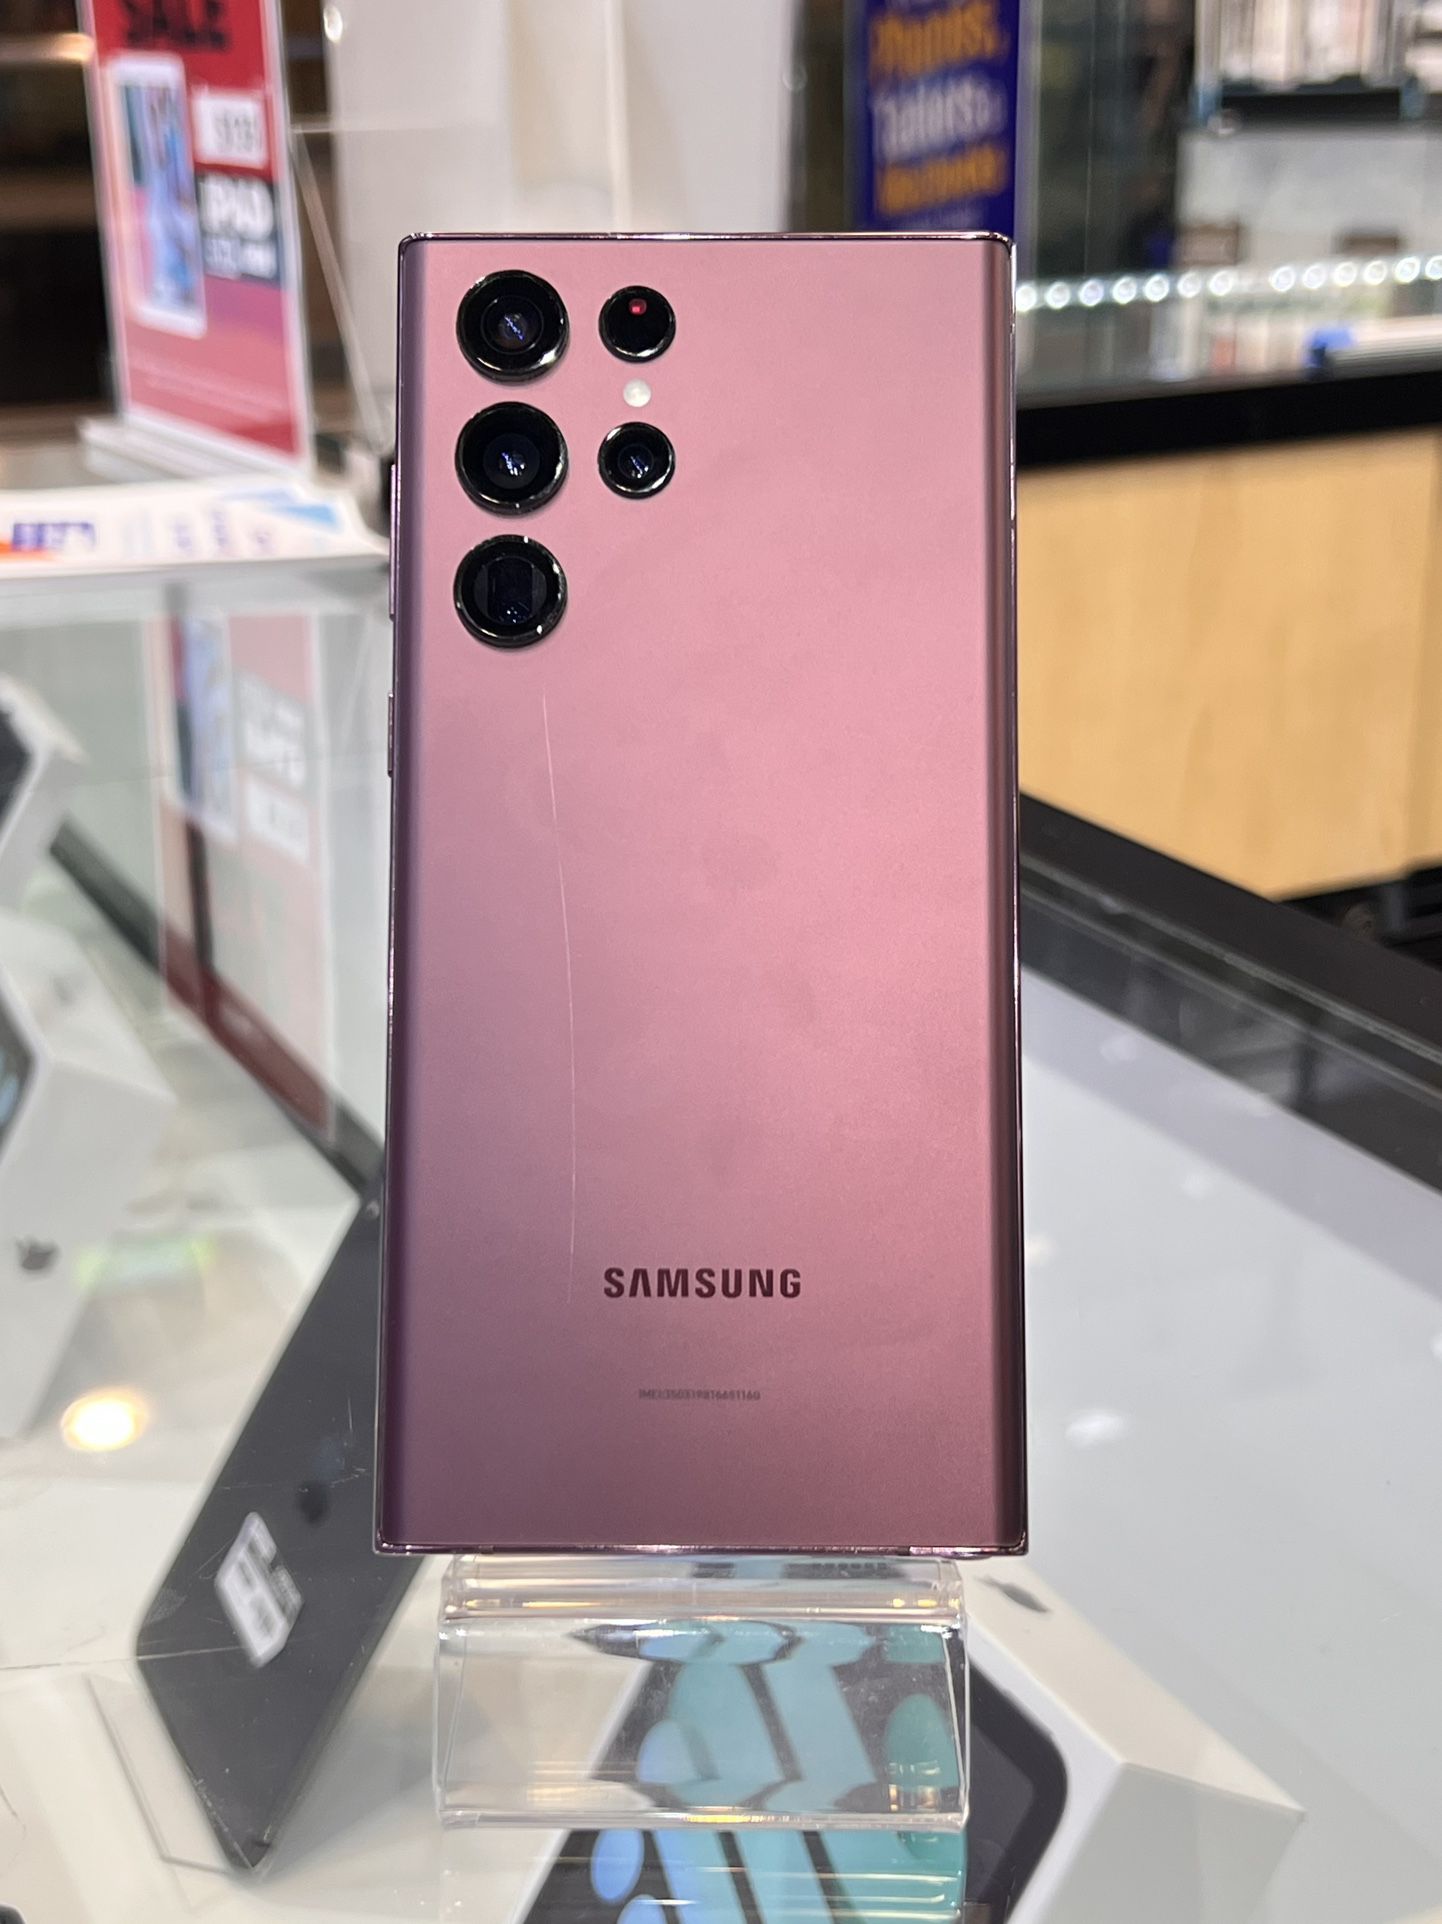 Samsung Galaxy S22 Ultra 128GB Unlocked $54 Down Payment 